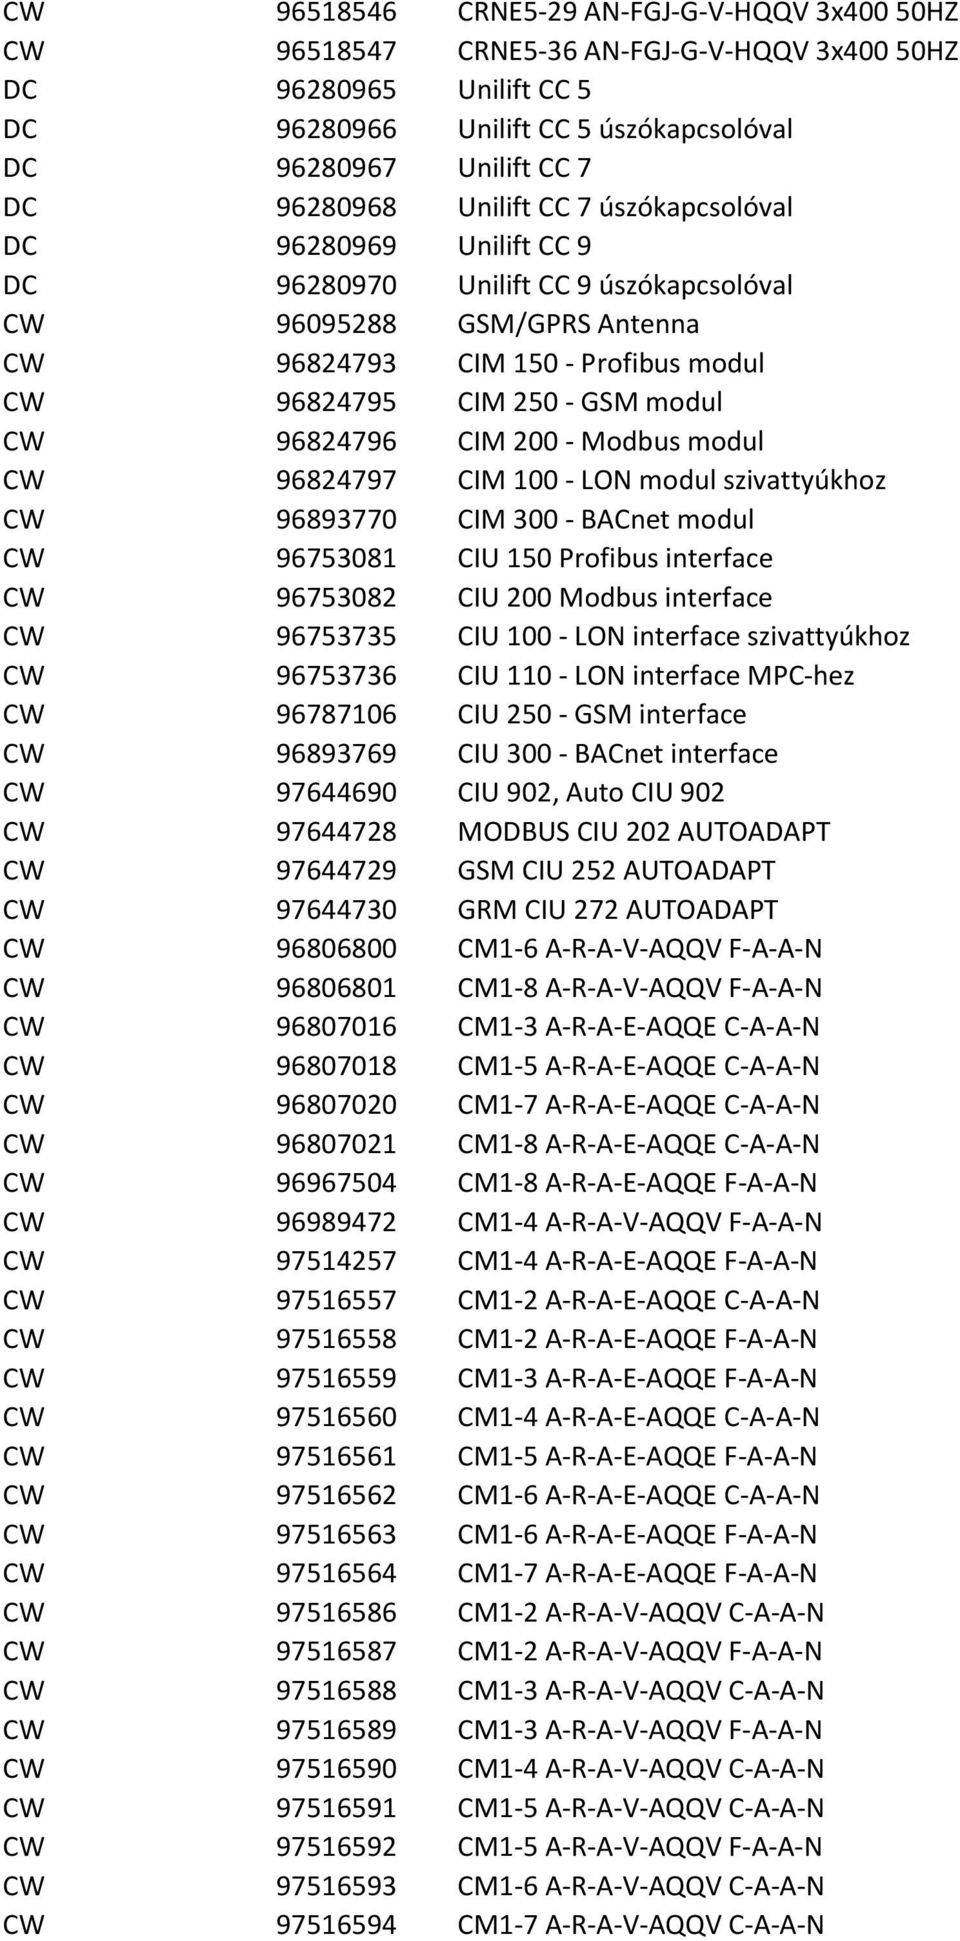 96824796 CIM 200 - Modbus modul CW 96824797 CIM 100 - LON modul szivattyúkhoz CW 96893770 CIM 300 - BACnet modul CW 96753081 CIU 150 Profibus interface CW 96753082 CIU 200 Modbus interface CW